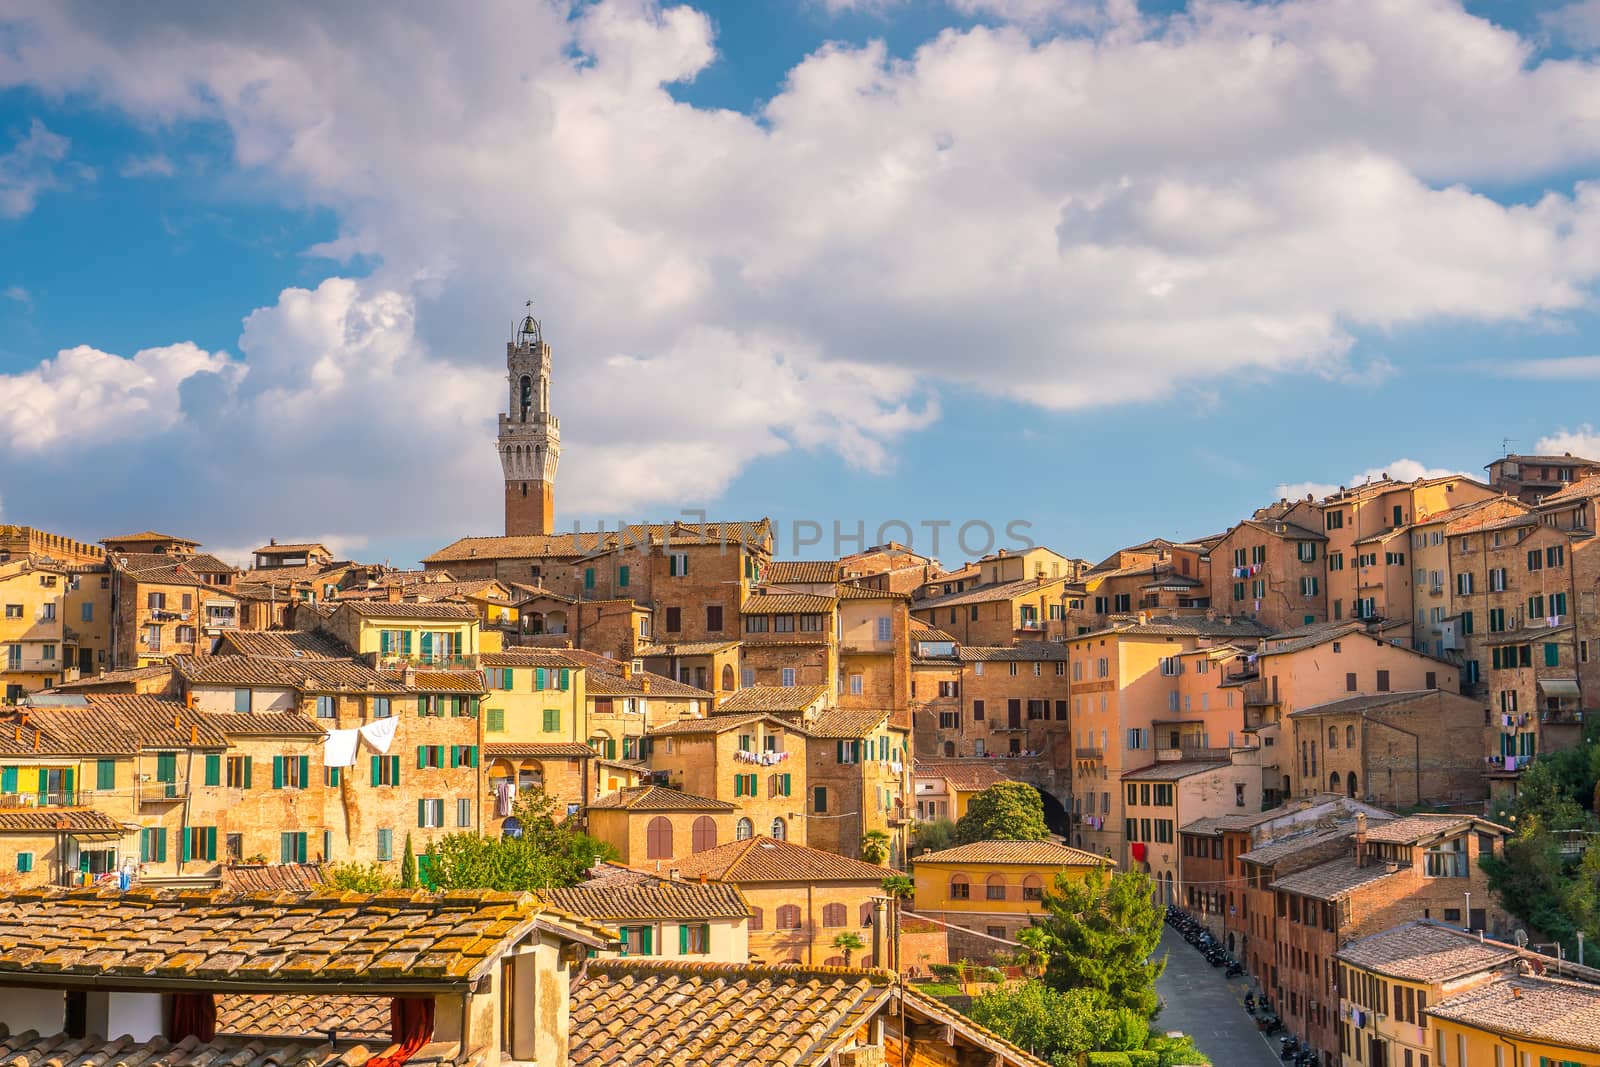 Downtown Siena skyline in Italy  by f11photo